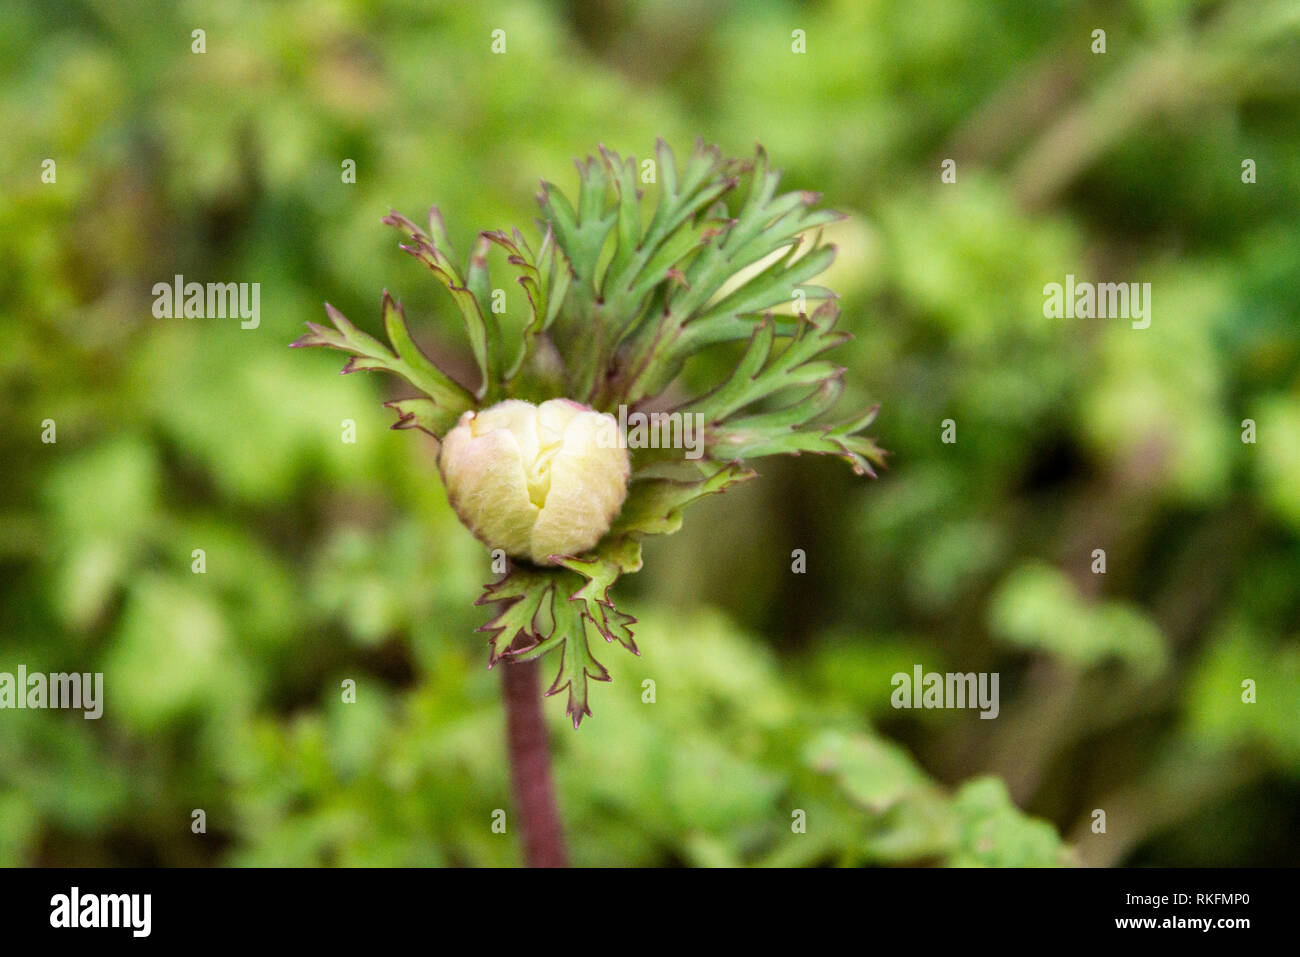 The bud of a garden anemone (Anemone coronaria) Stock Photo